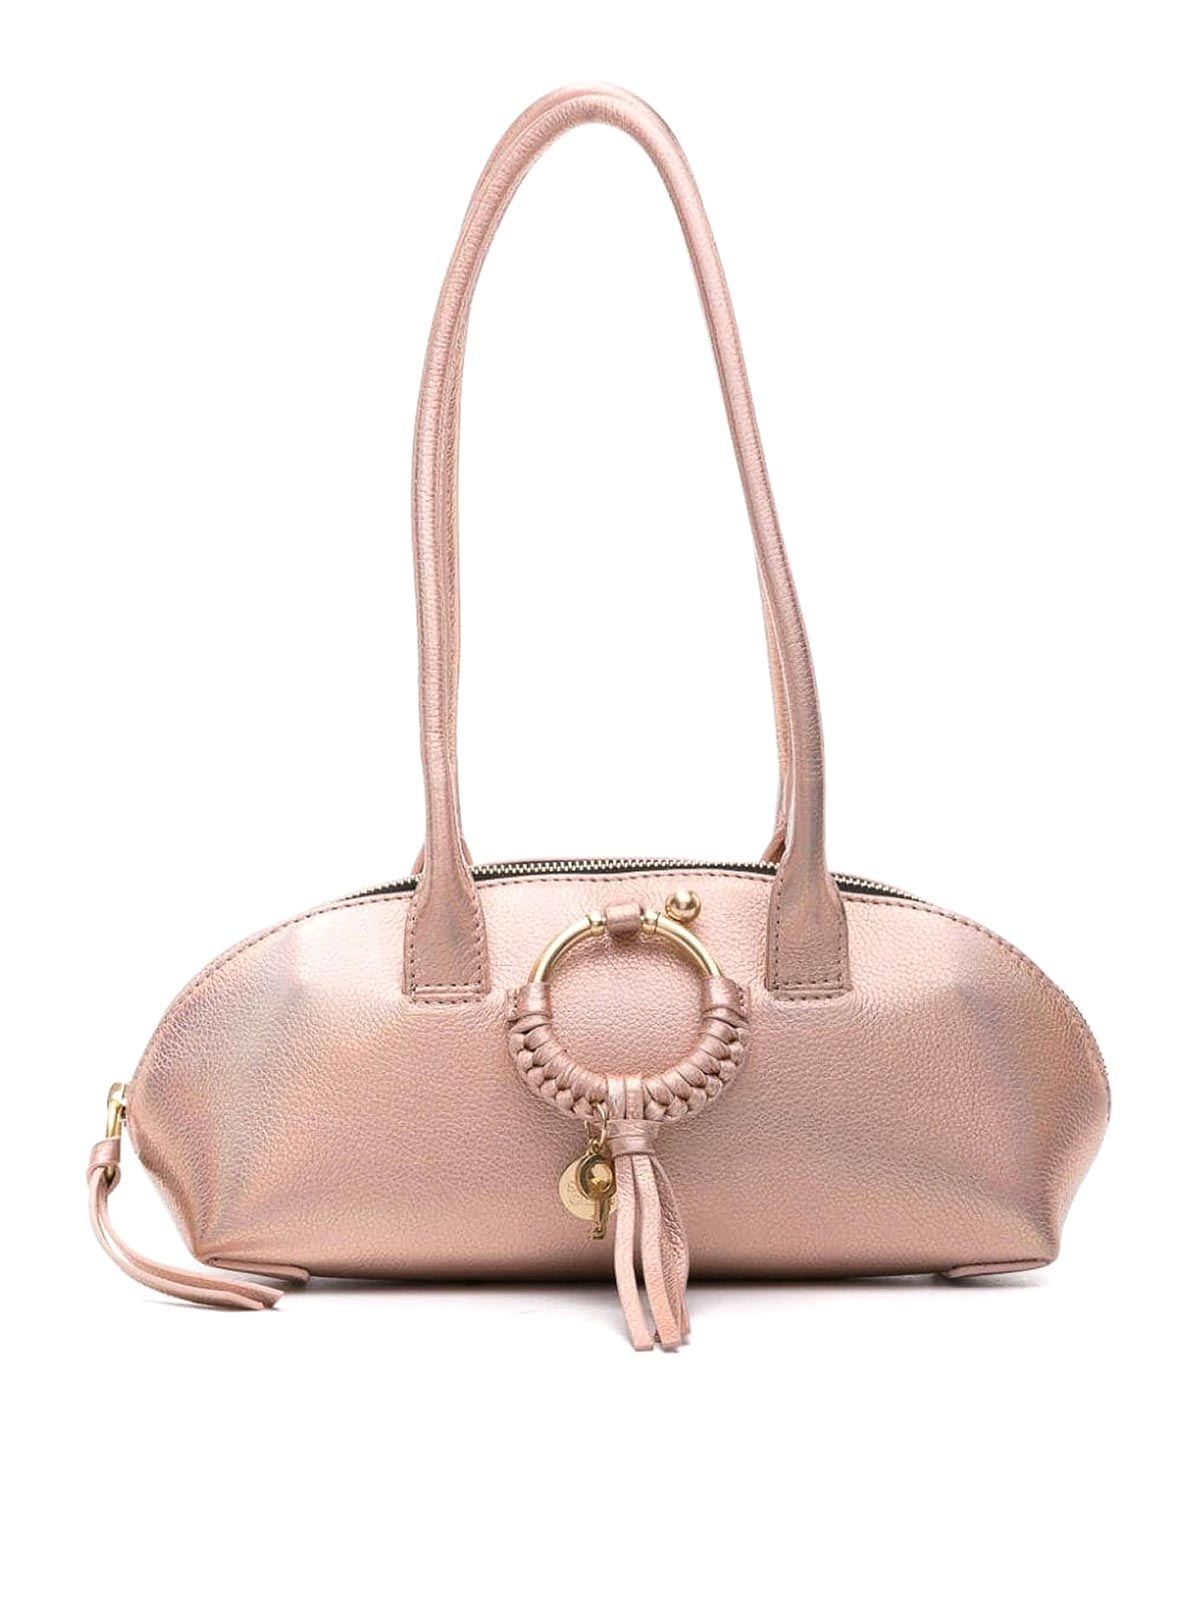 See By Chloé Joan Leather Shoulder Bag In Rosado